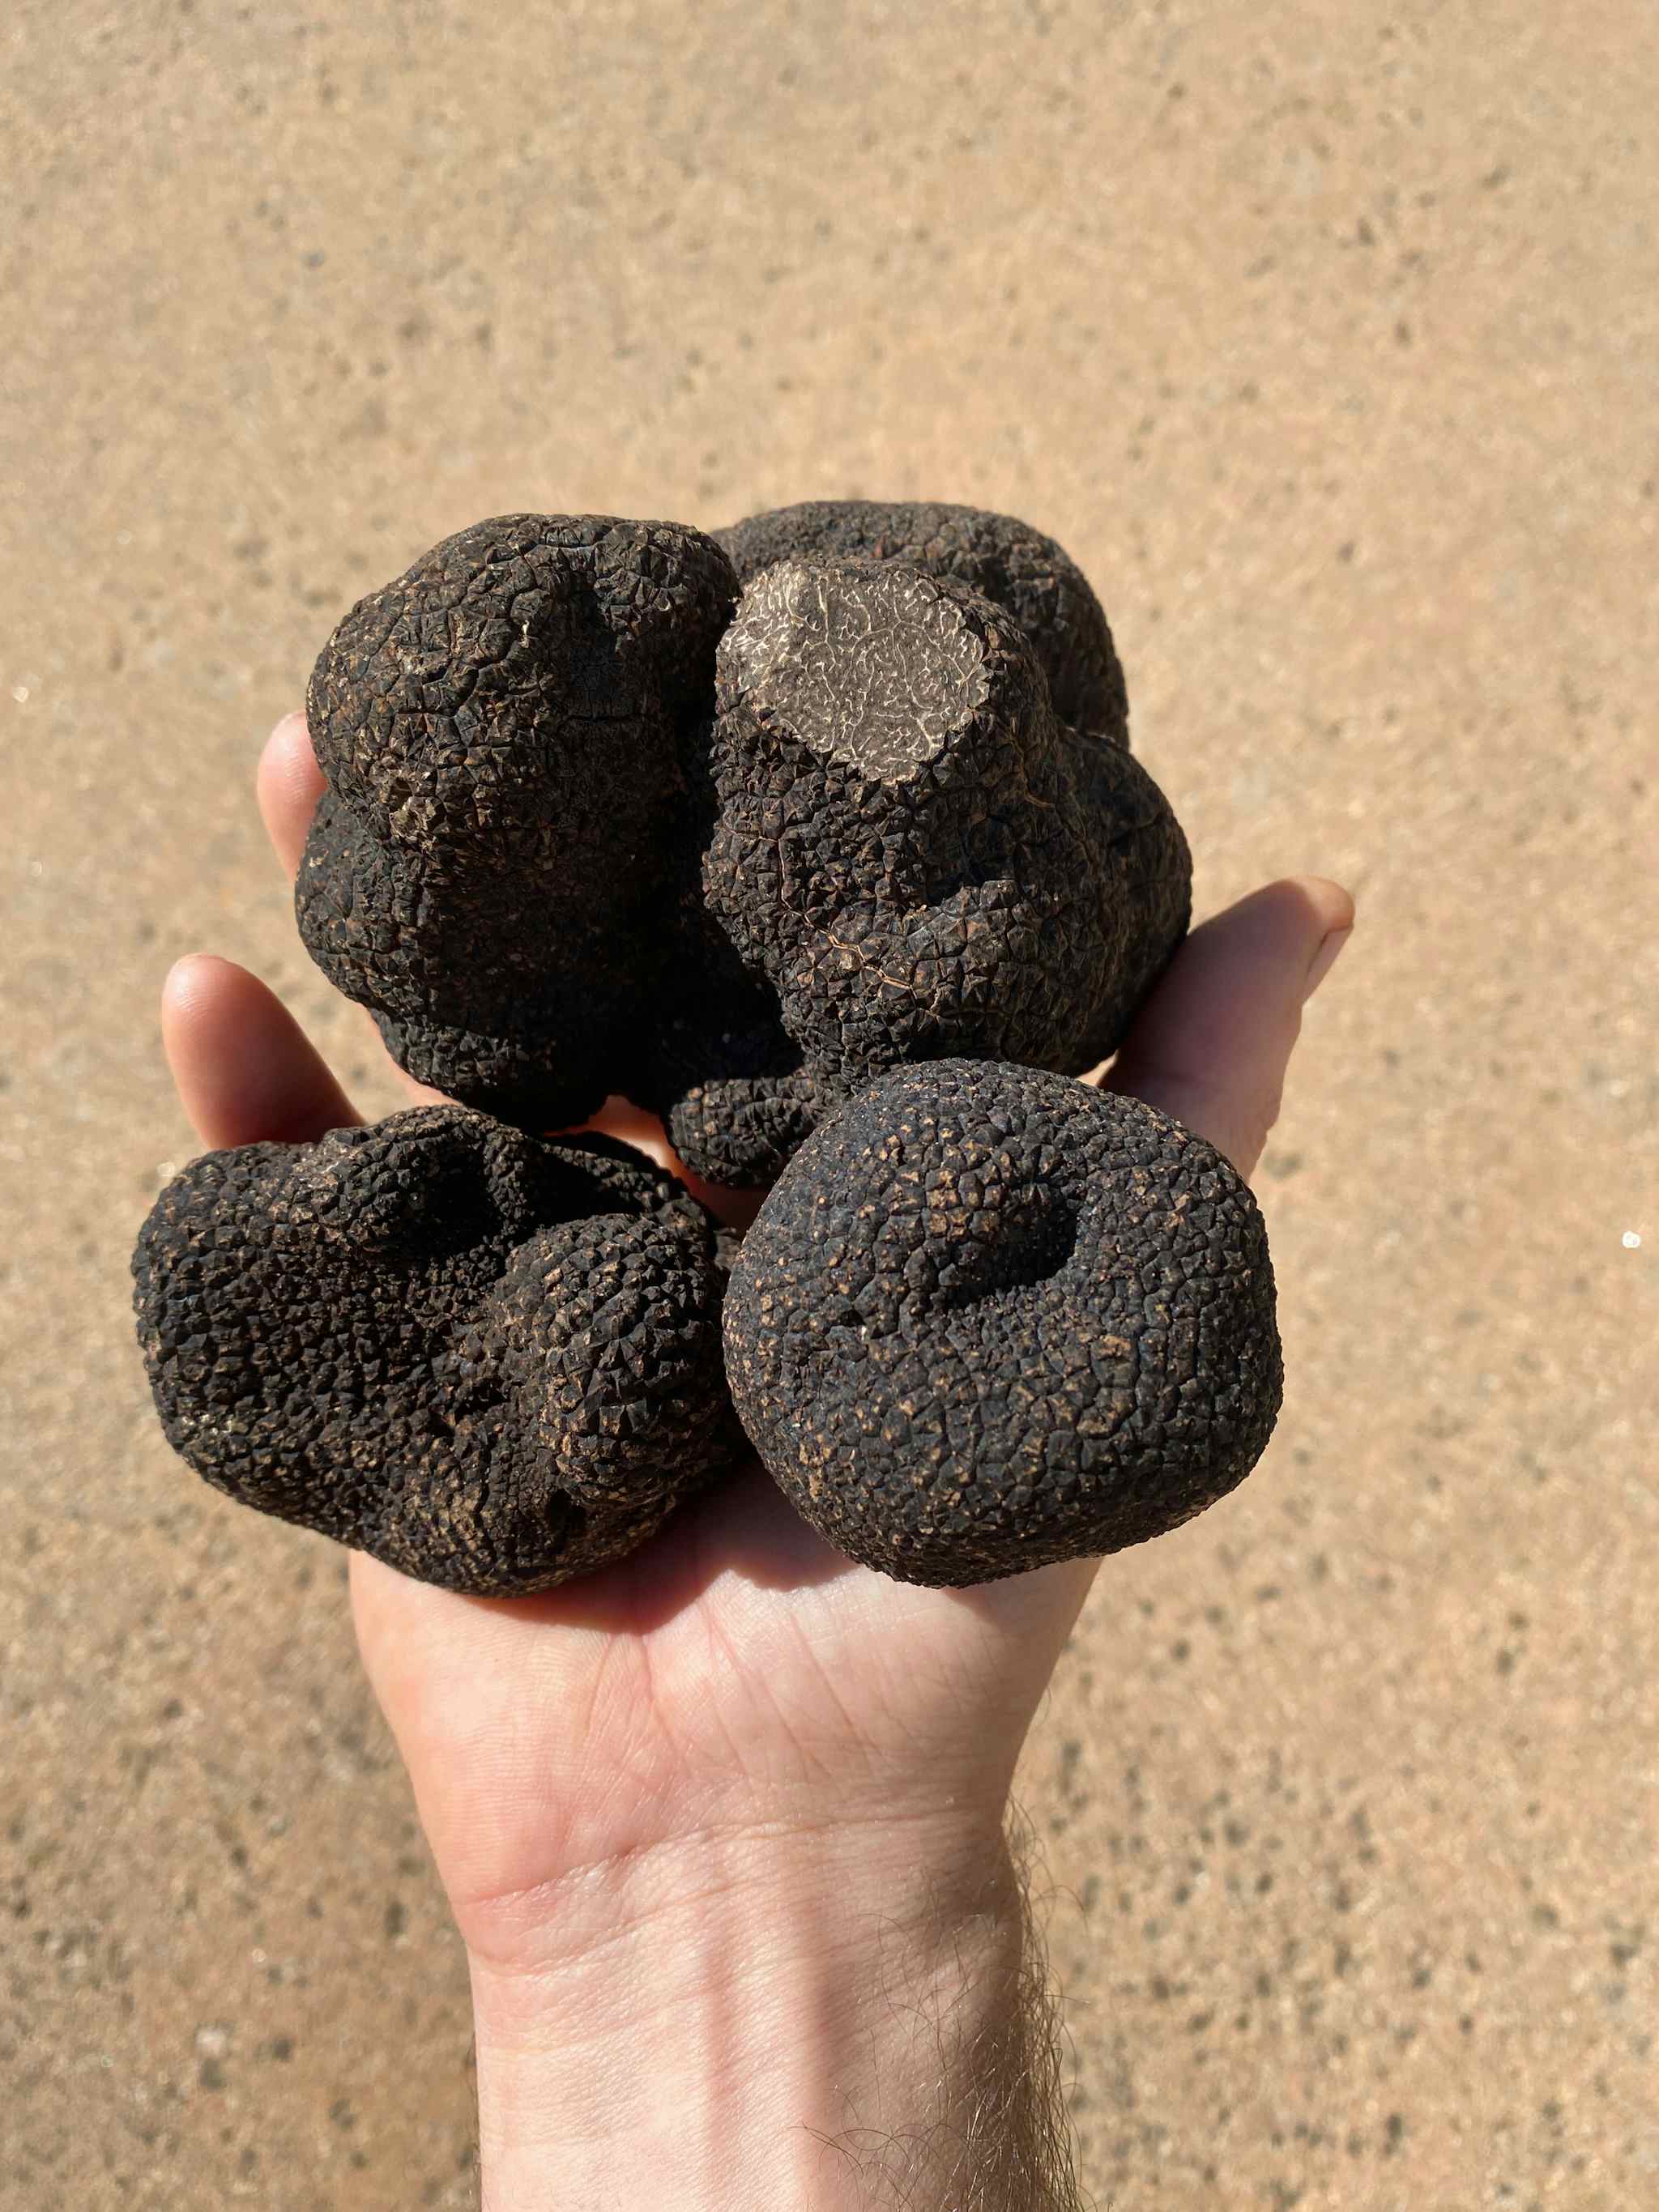 Winter Black Truffle (T. melanosporum) WHOLESALE PRICING